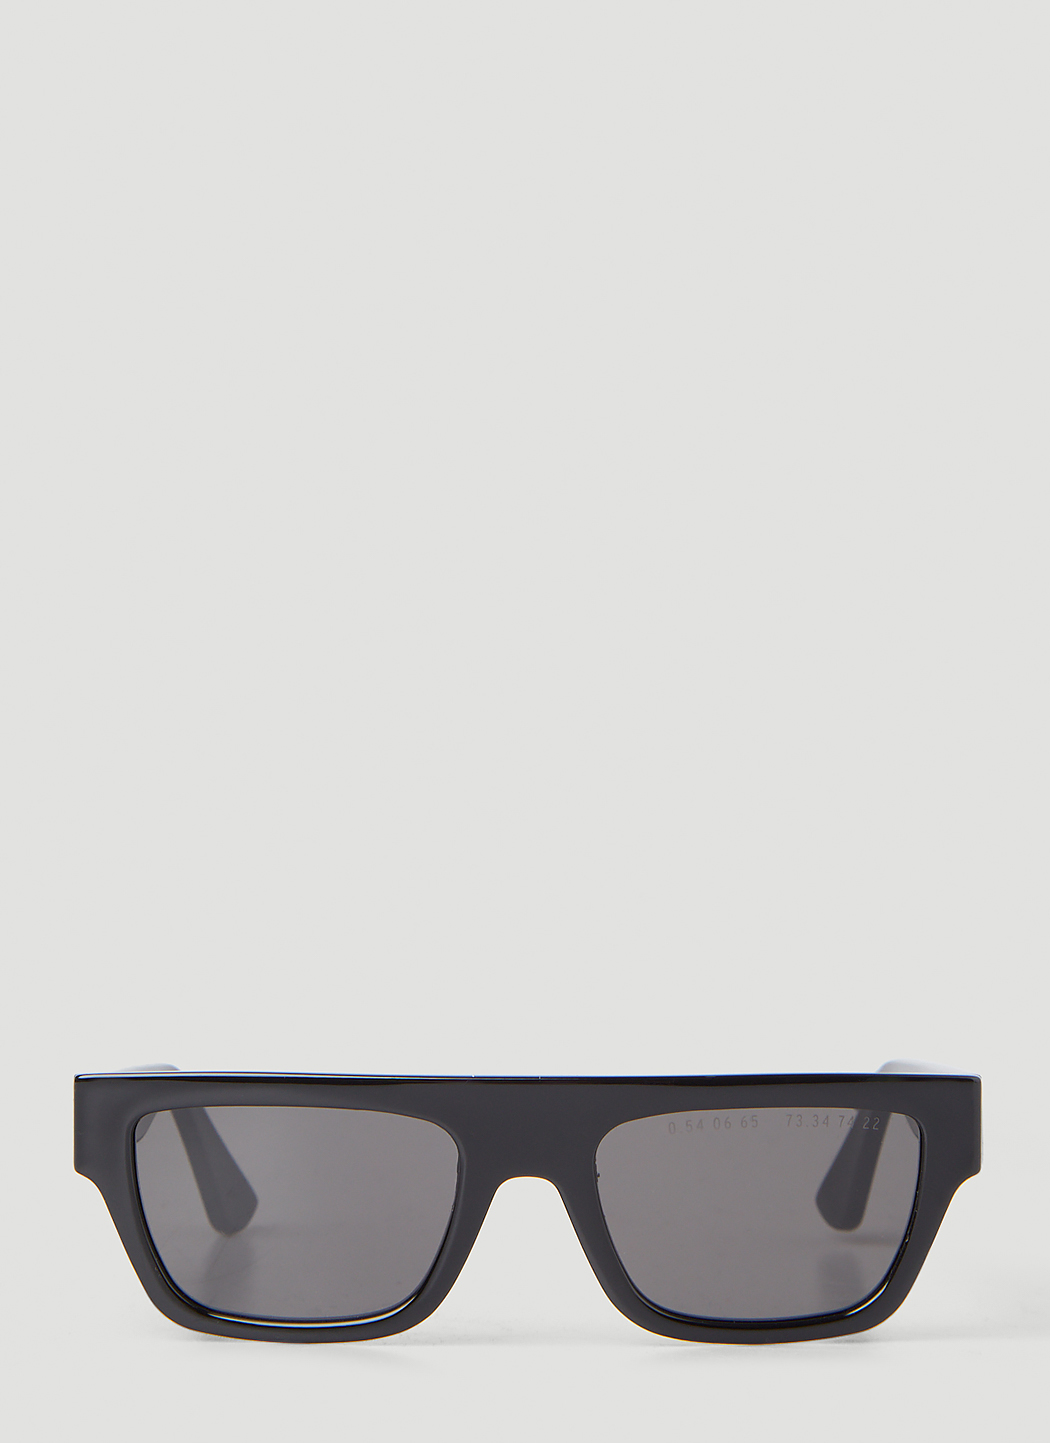 Type 01 Low Sunglasses